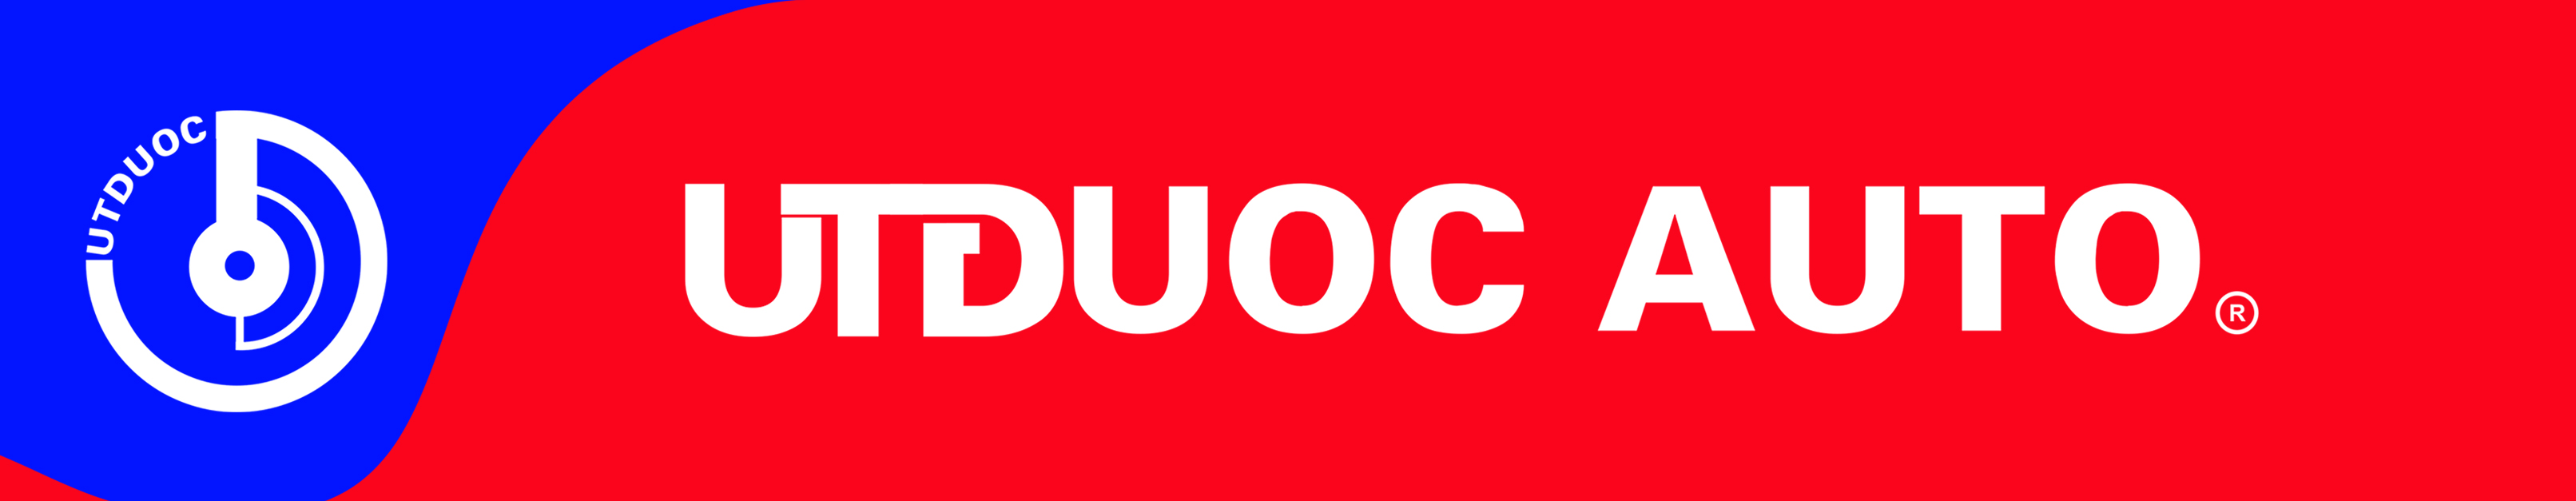 Logo utduocauto.com full player